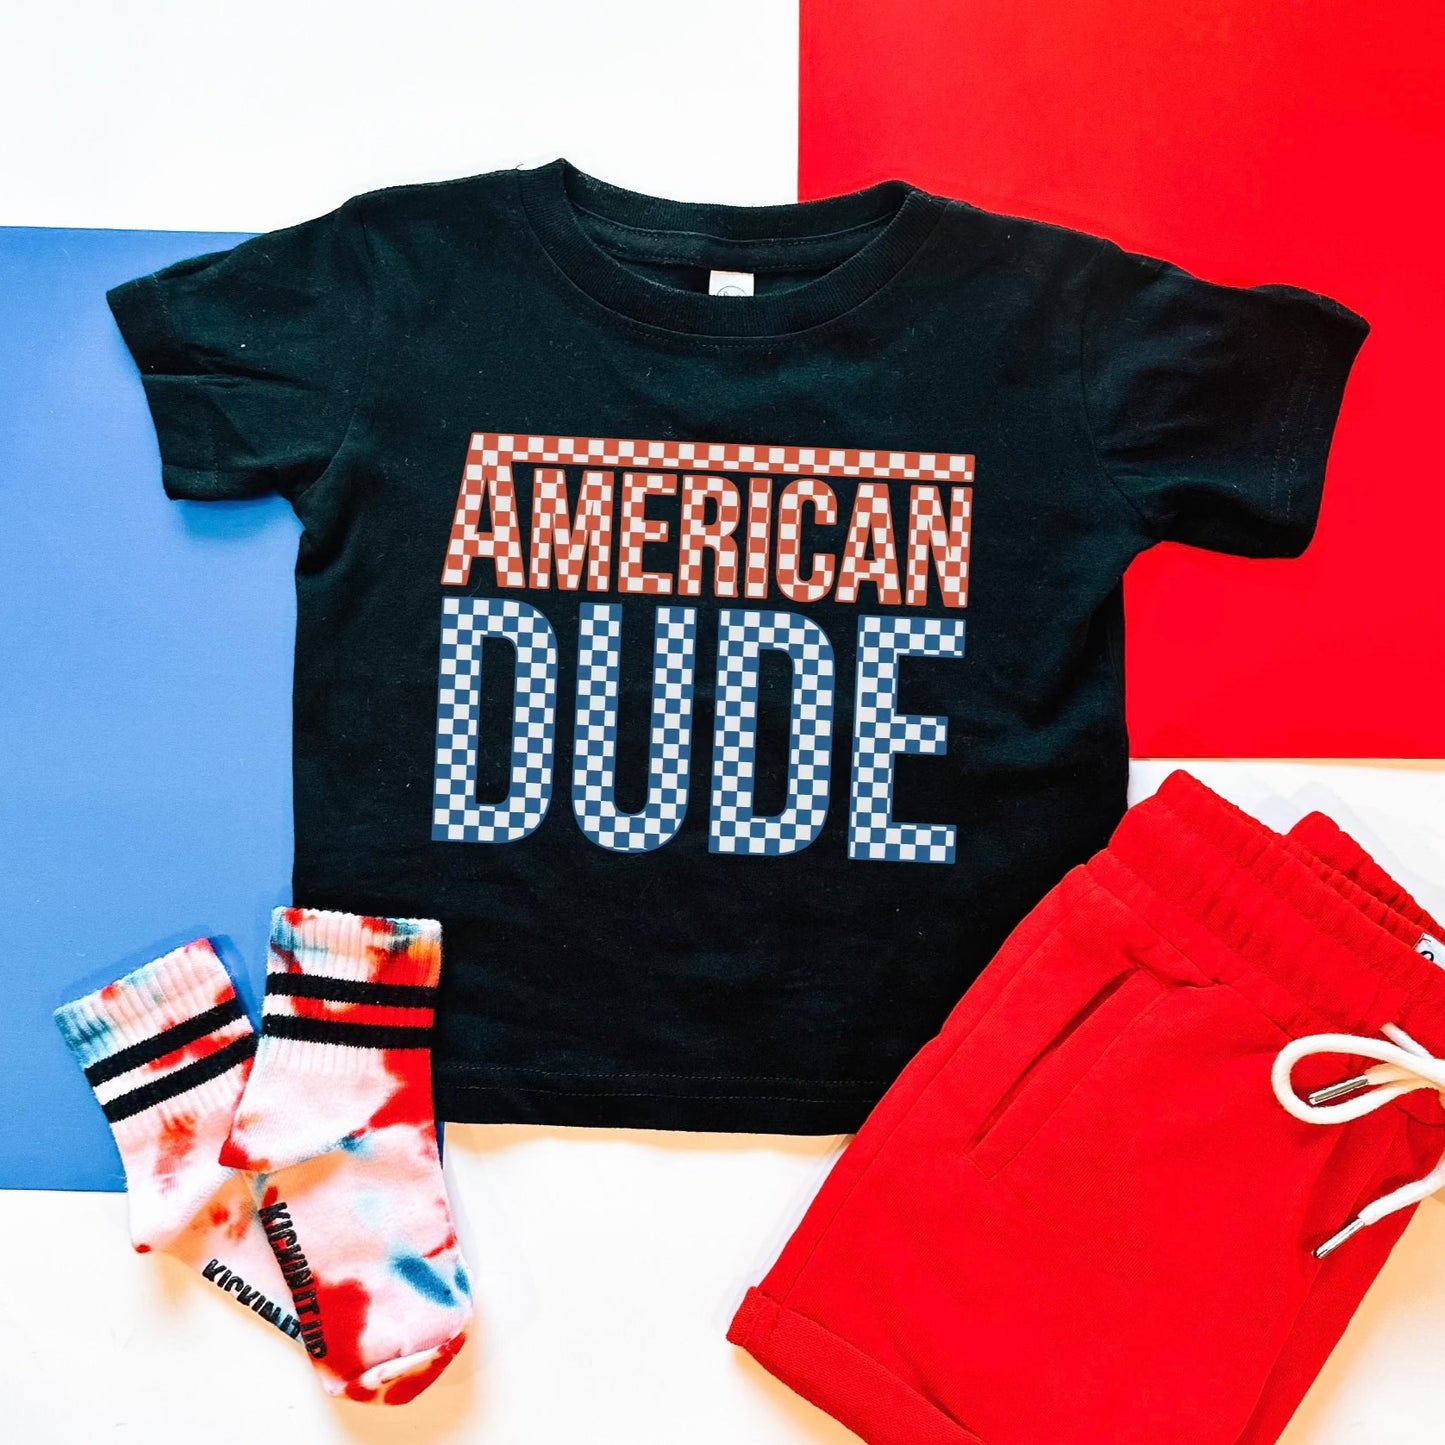 American Dude | Black Graphic T-shirt